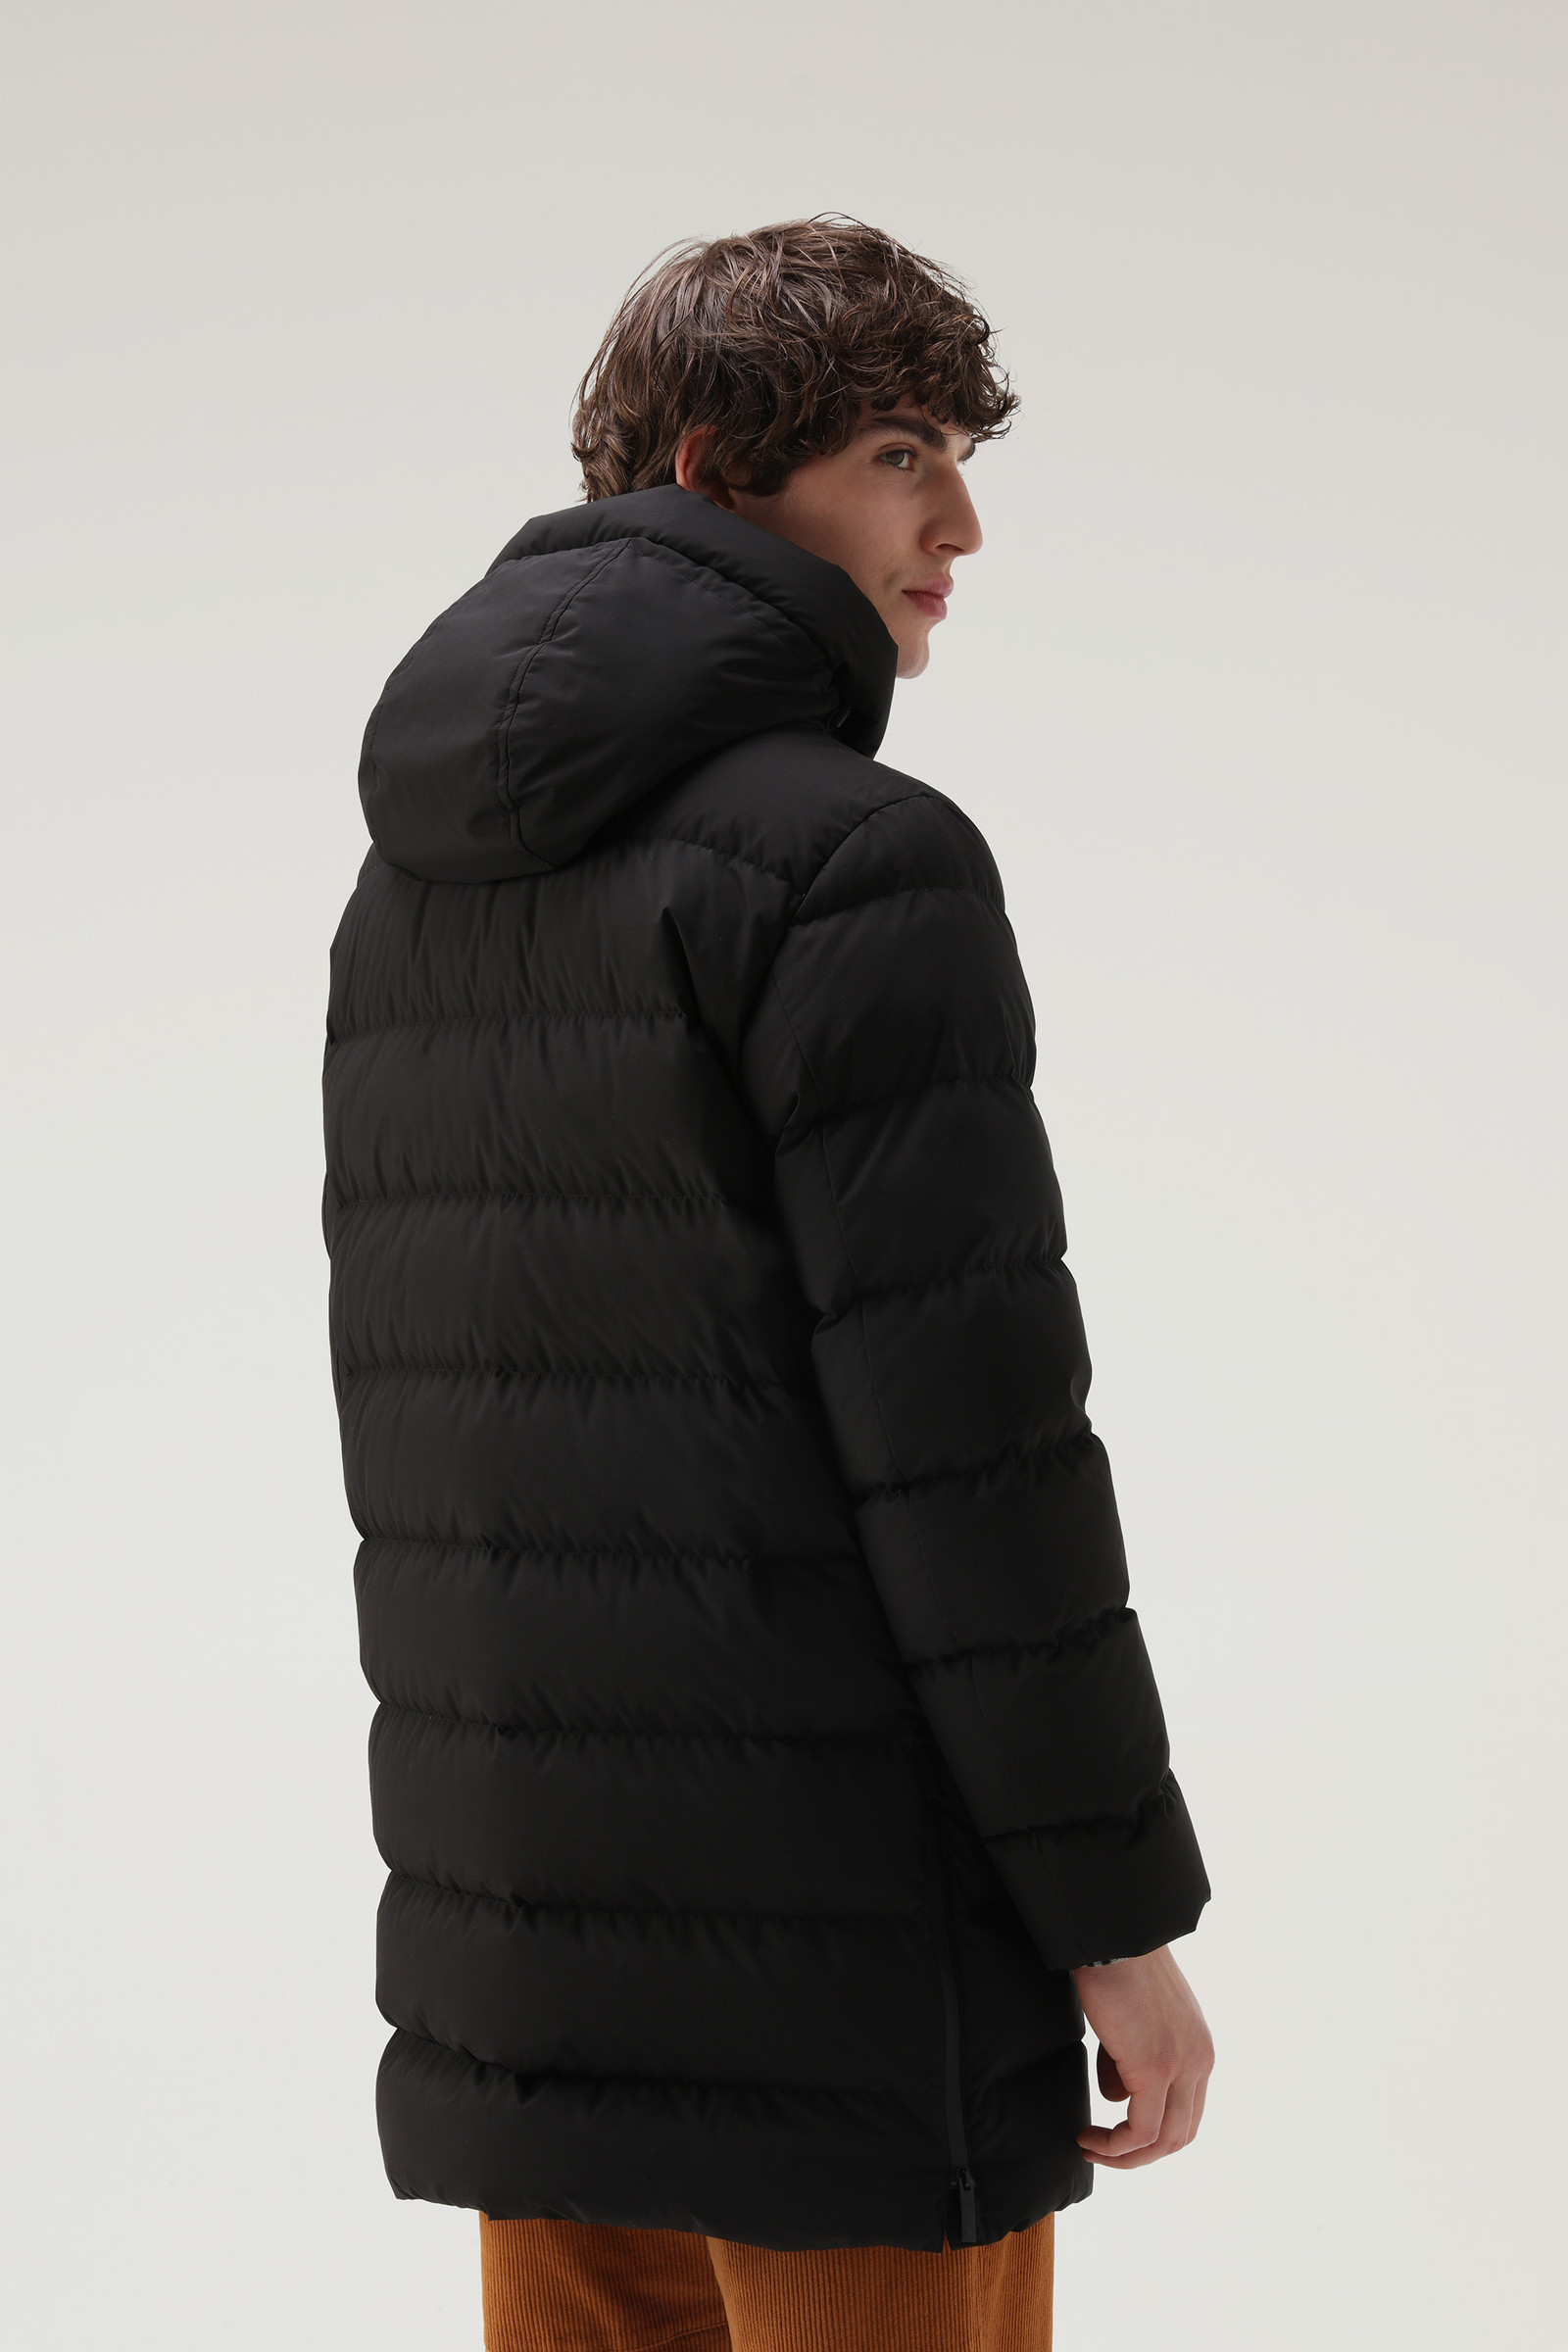 Quilted Long Jacket in GORE-TEX Infinium - Men - Black